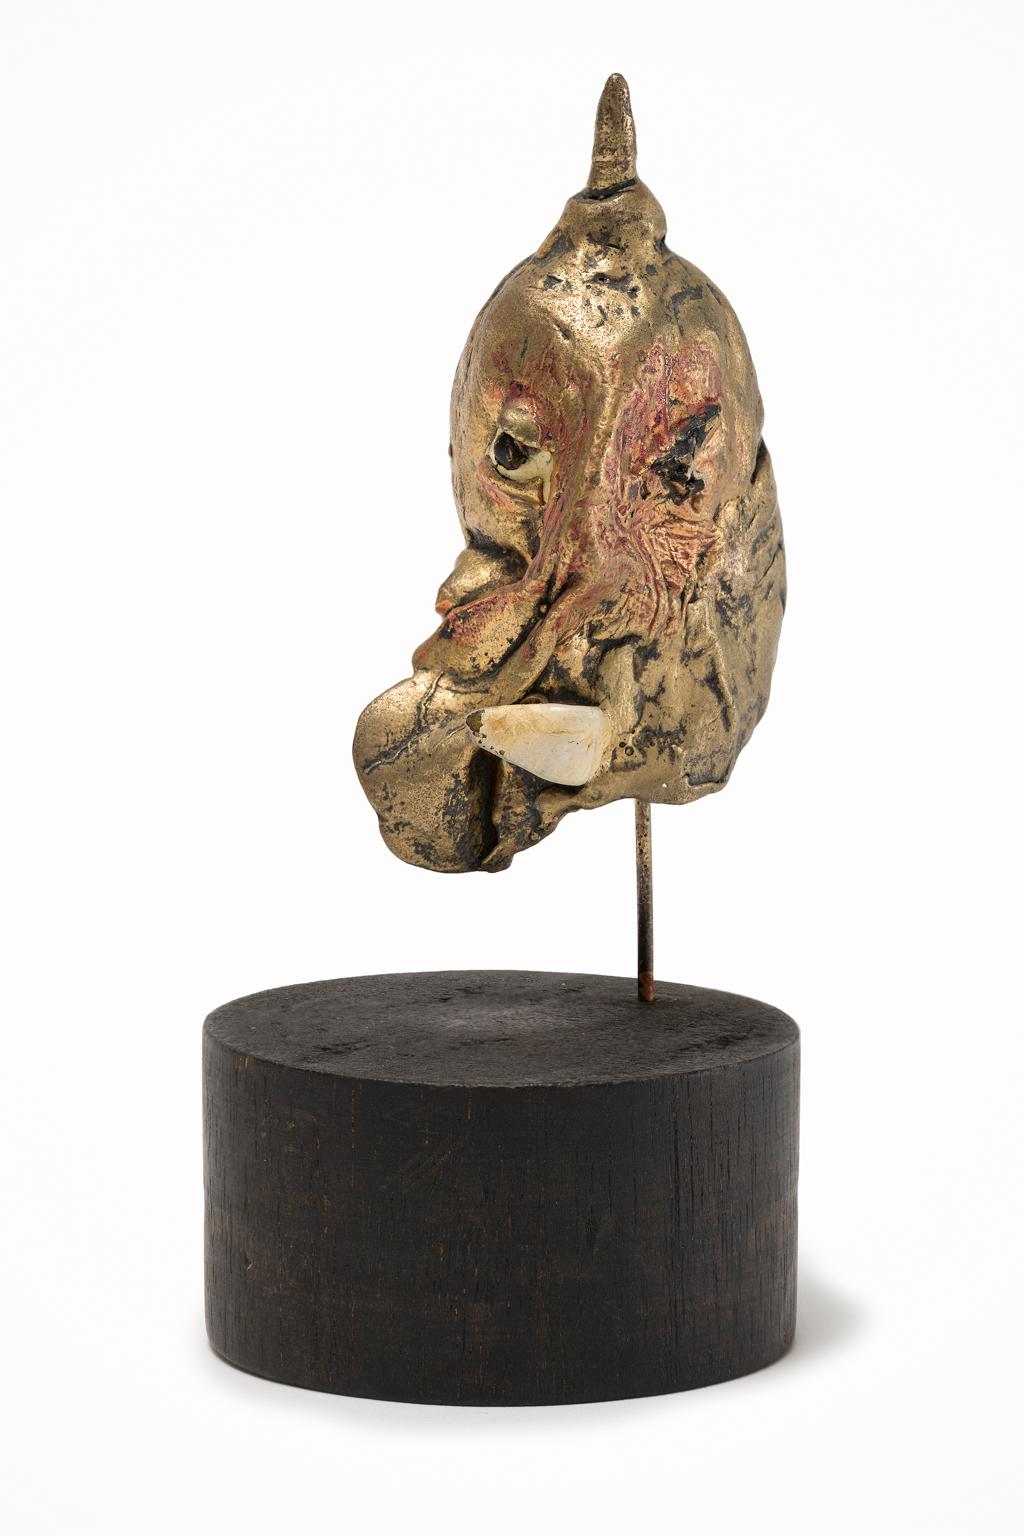 Umberto Del Negro Figurative Sculpture - Statuette, Metal Sculpture, Psychological and Naturalistic